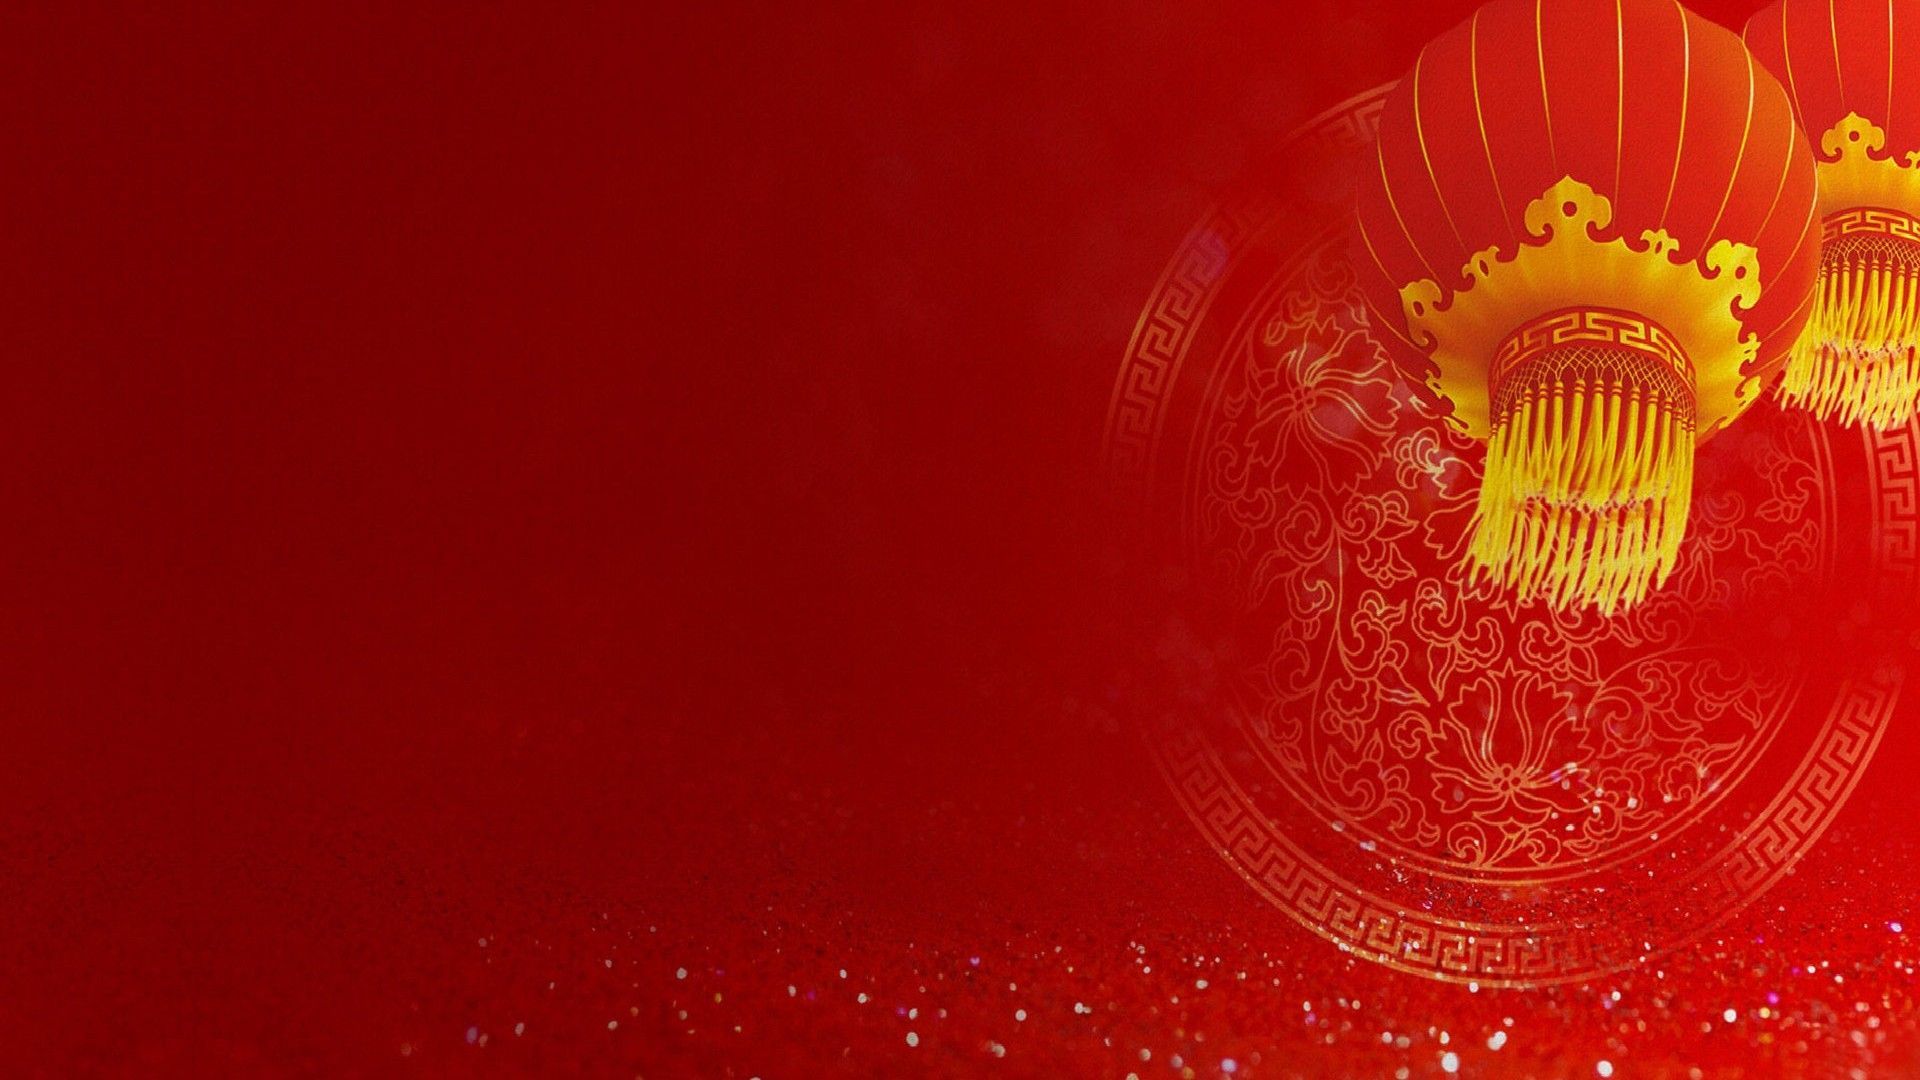 Chinese New Year Wallpaper Free Chinese New Year Background